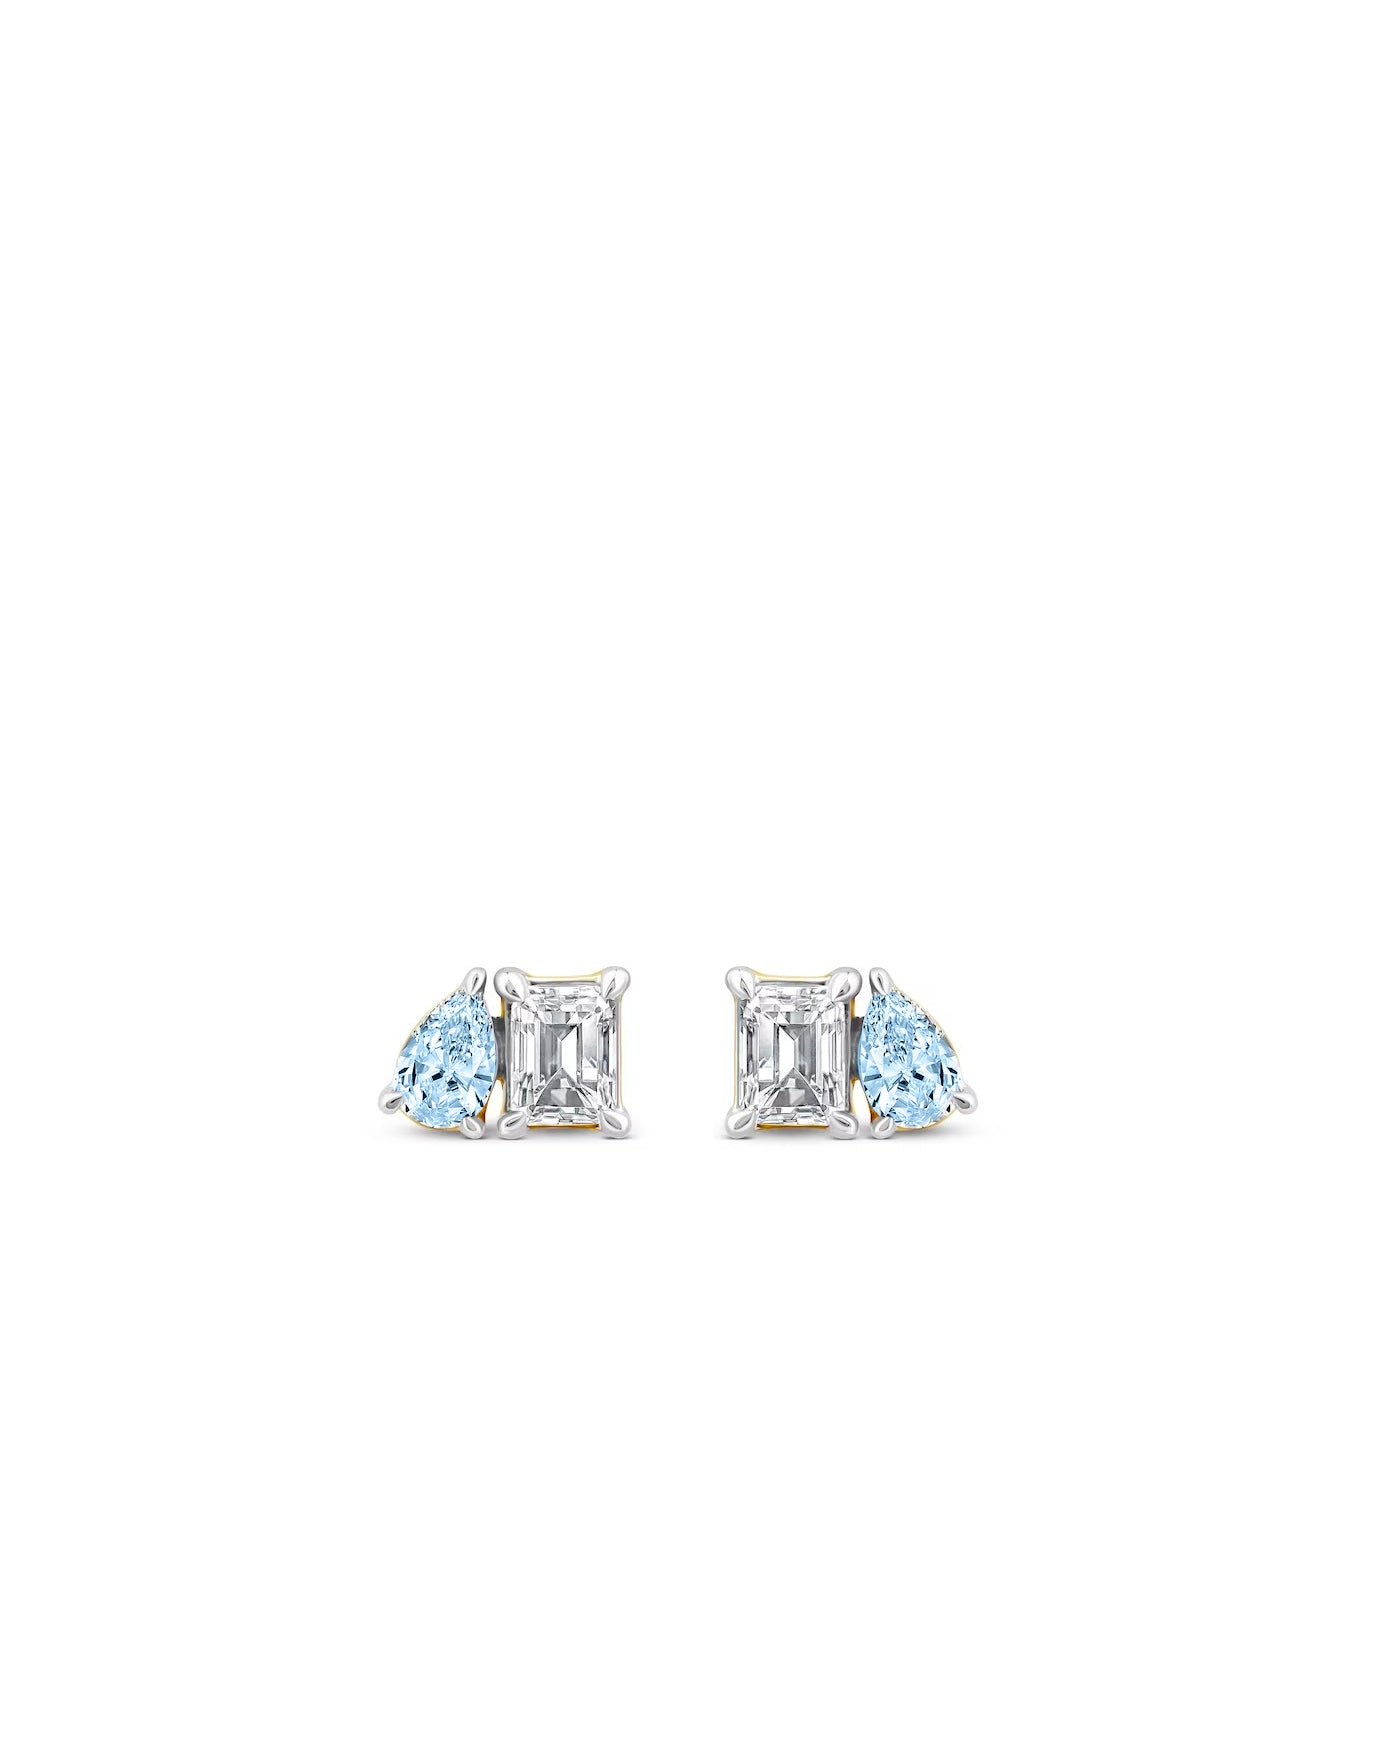 Toi et Moi Diamond Earring and Blue Topaz Studs | 1 carat